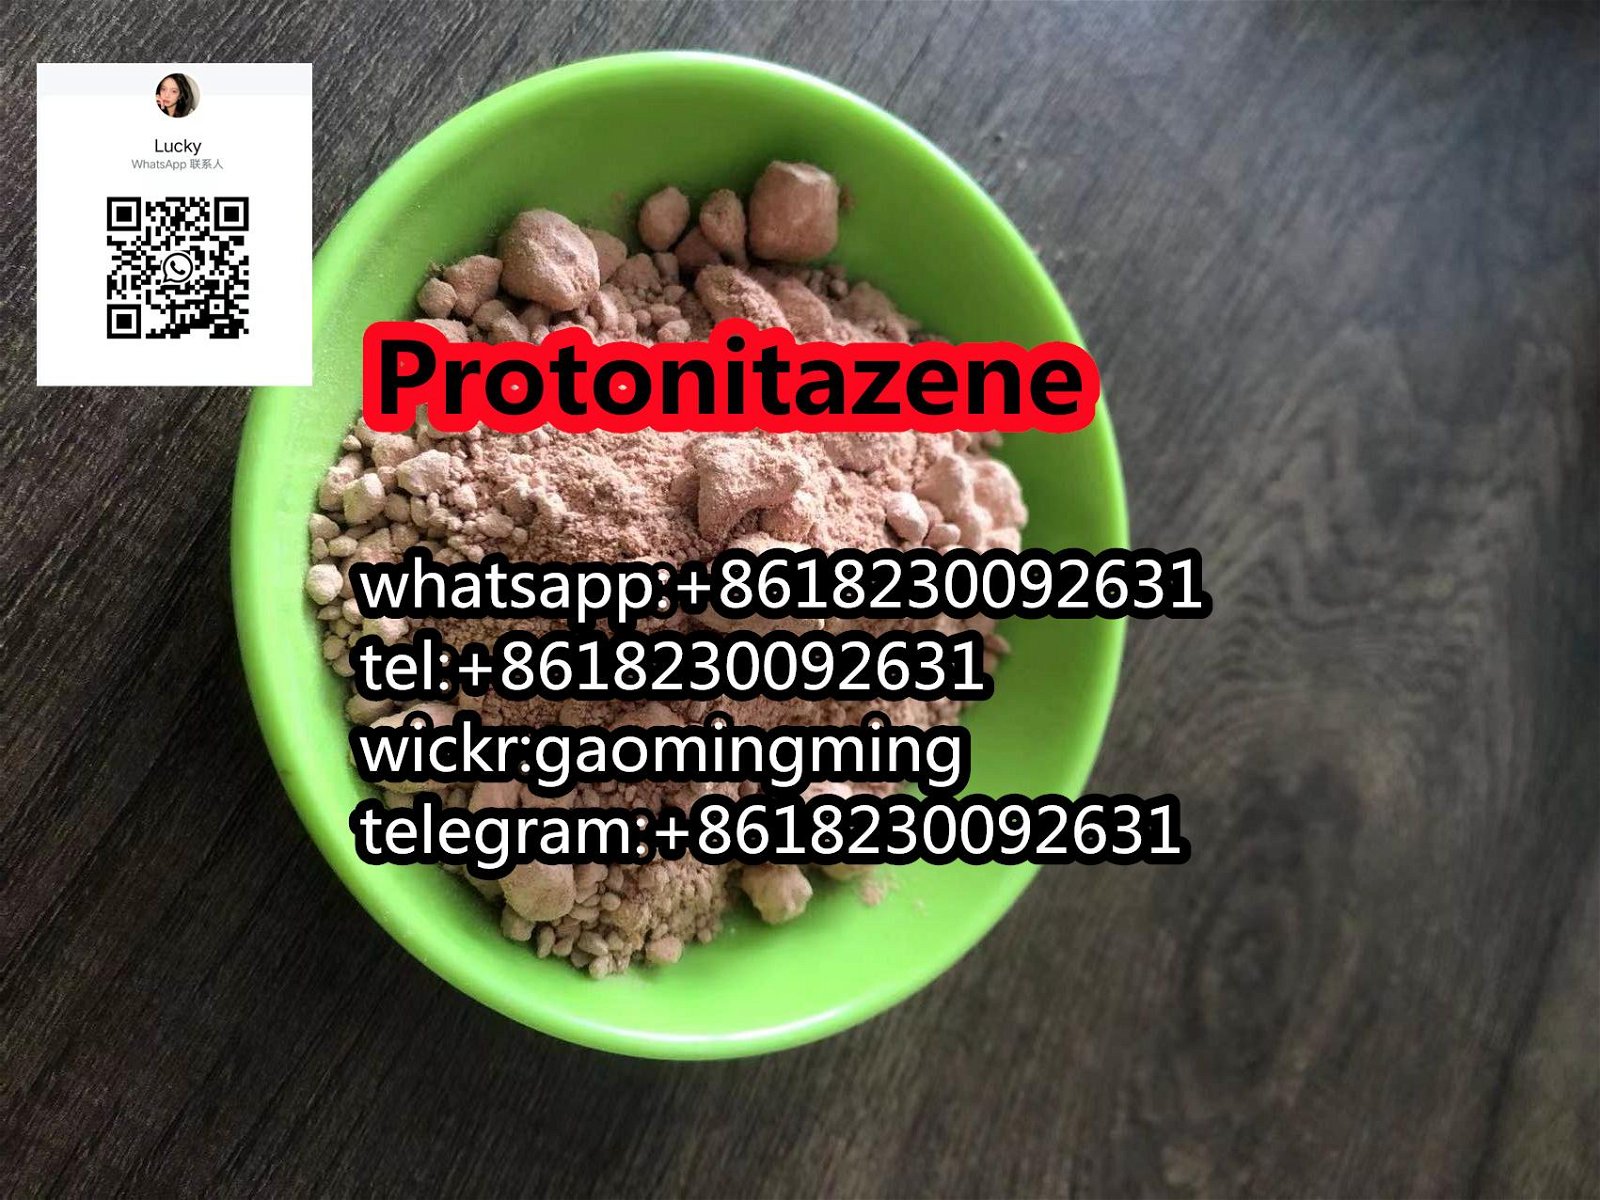 CAS 119276-01-6 Protonitazene Hydrochloride Factory supply